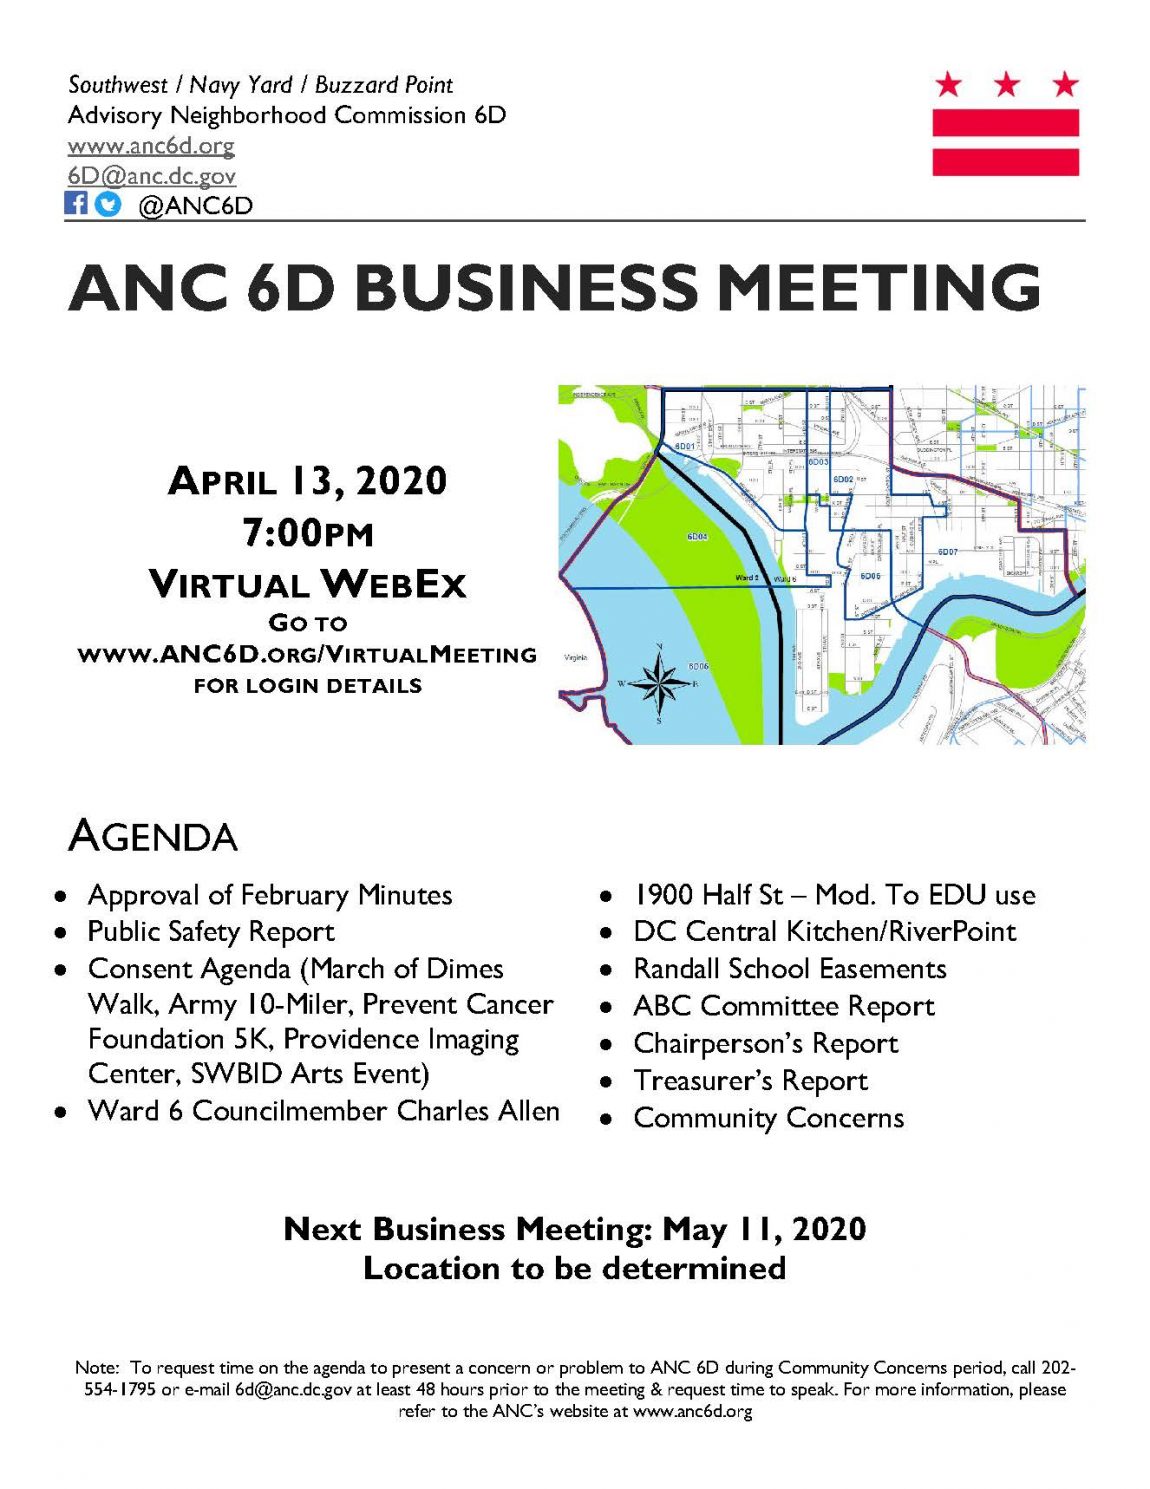 April 13, 2020 Business Meeting Announcement